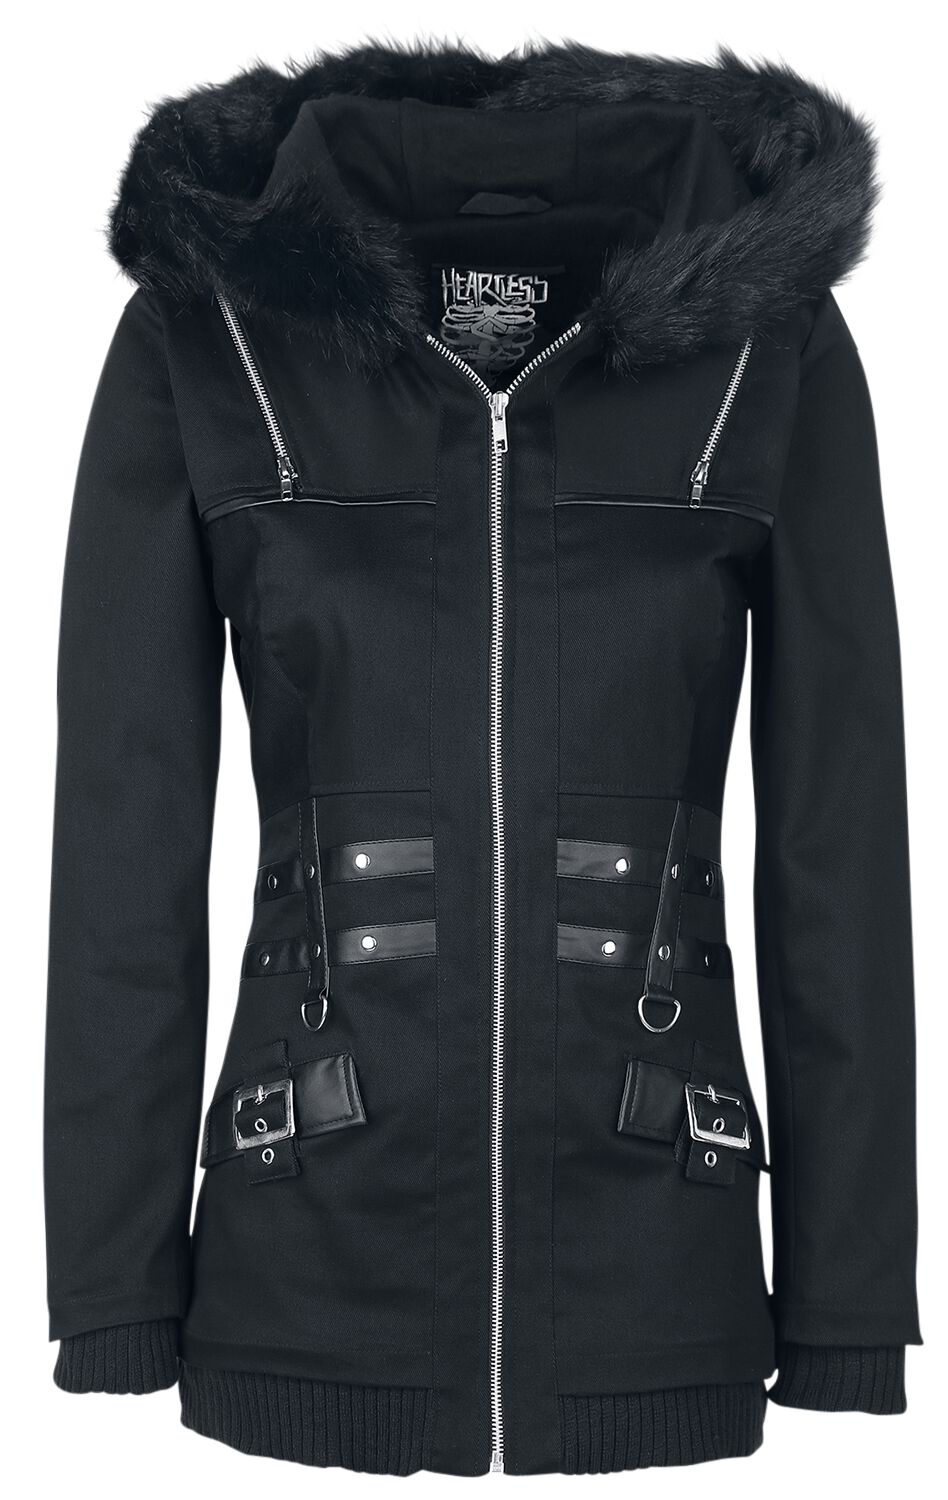 Heartless Sara Jacket Übergangsjacke schwarz in XL